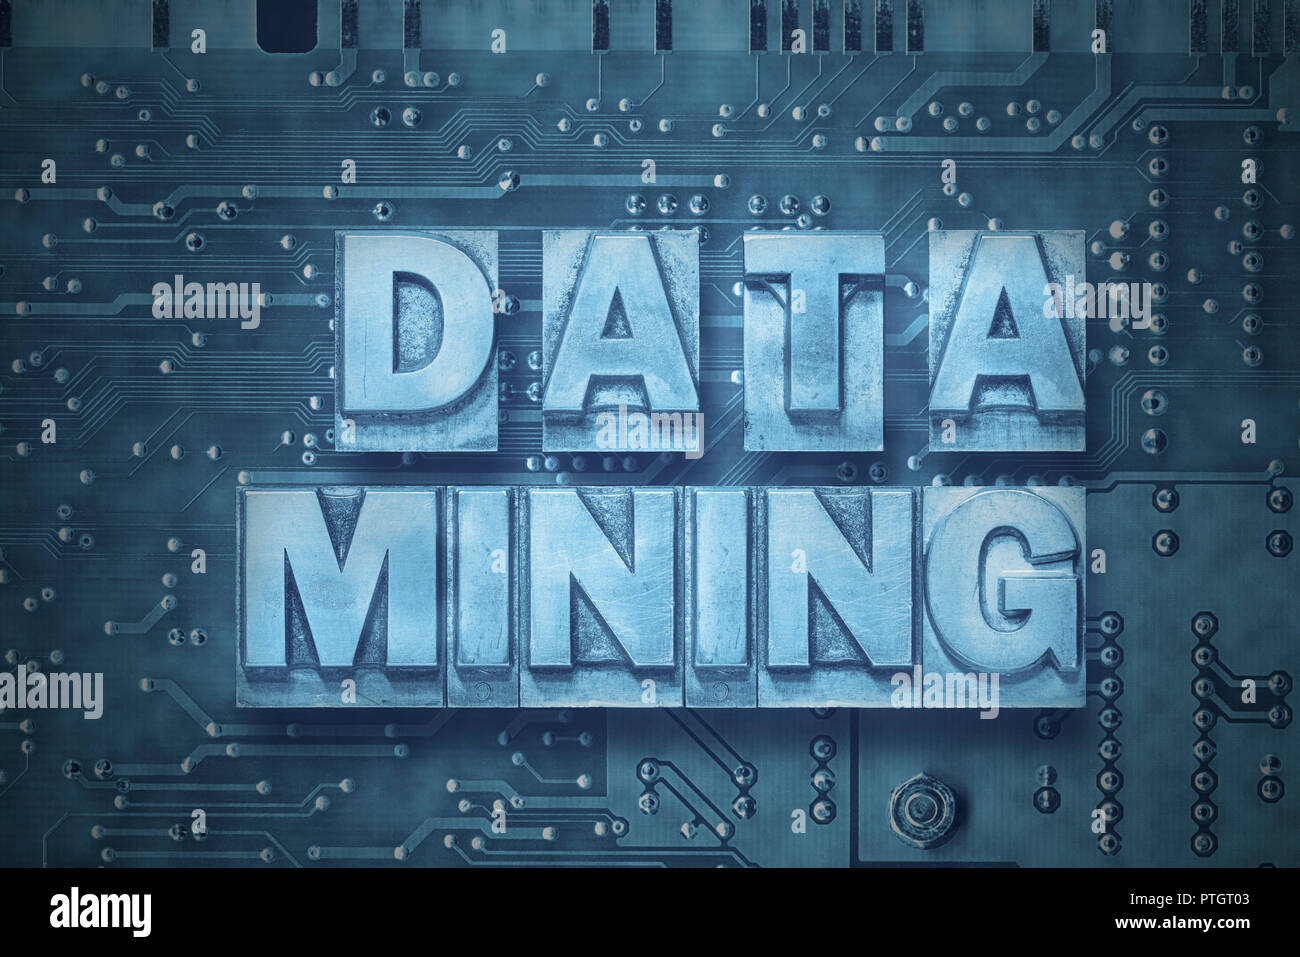 data mining phrase made from metallic letterpress blocks on the pc board background Stock Photo